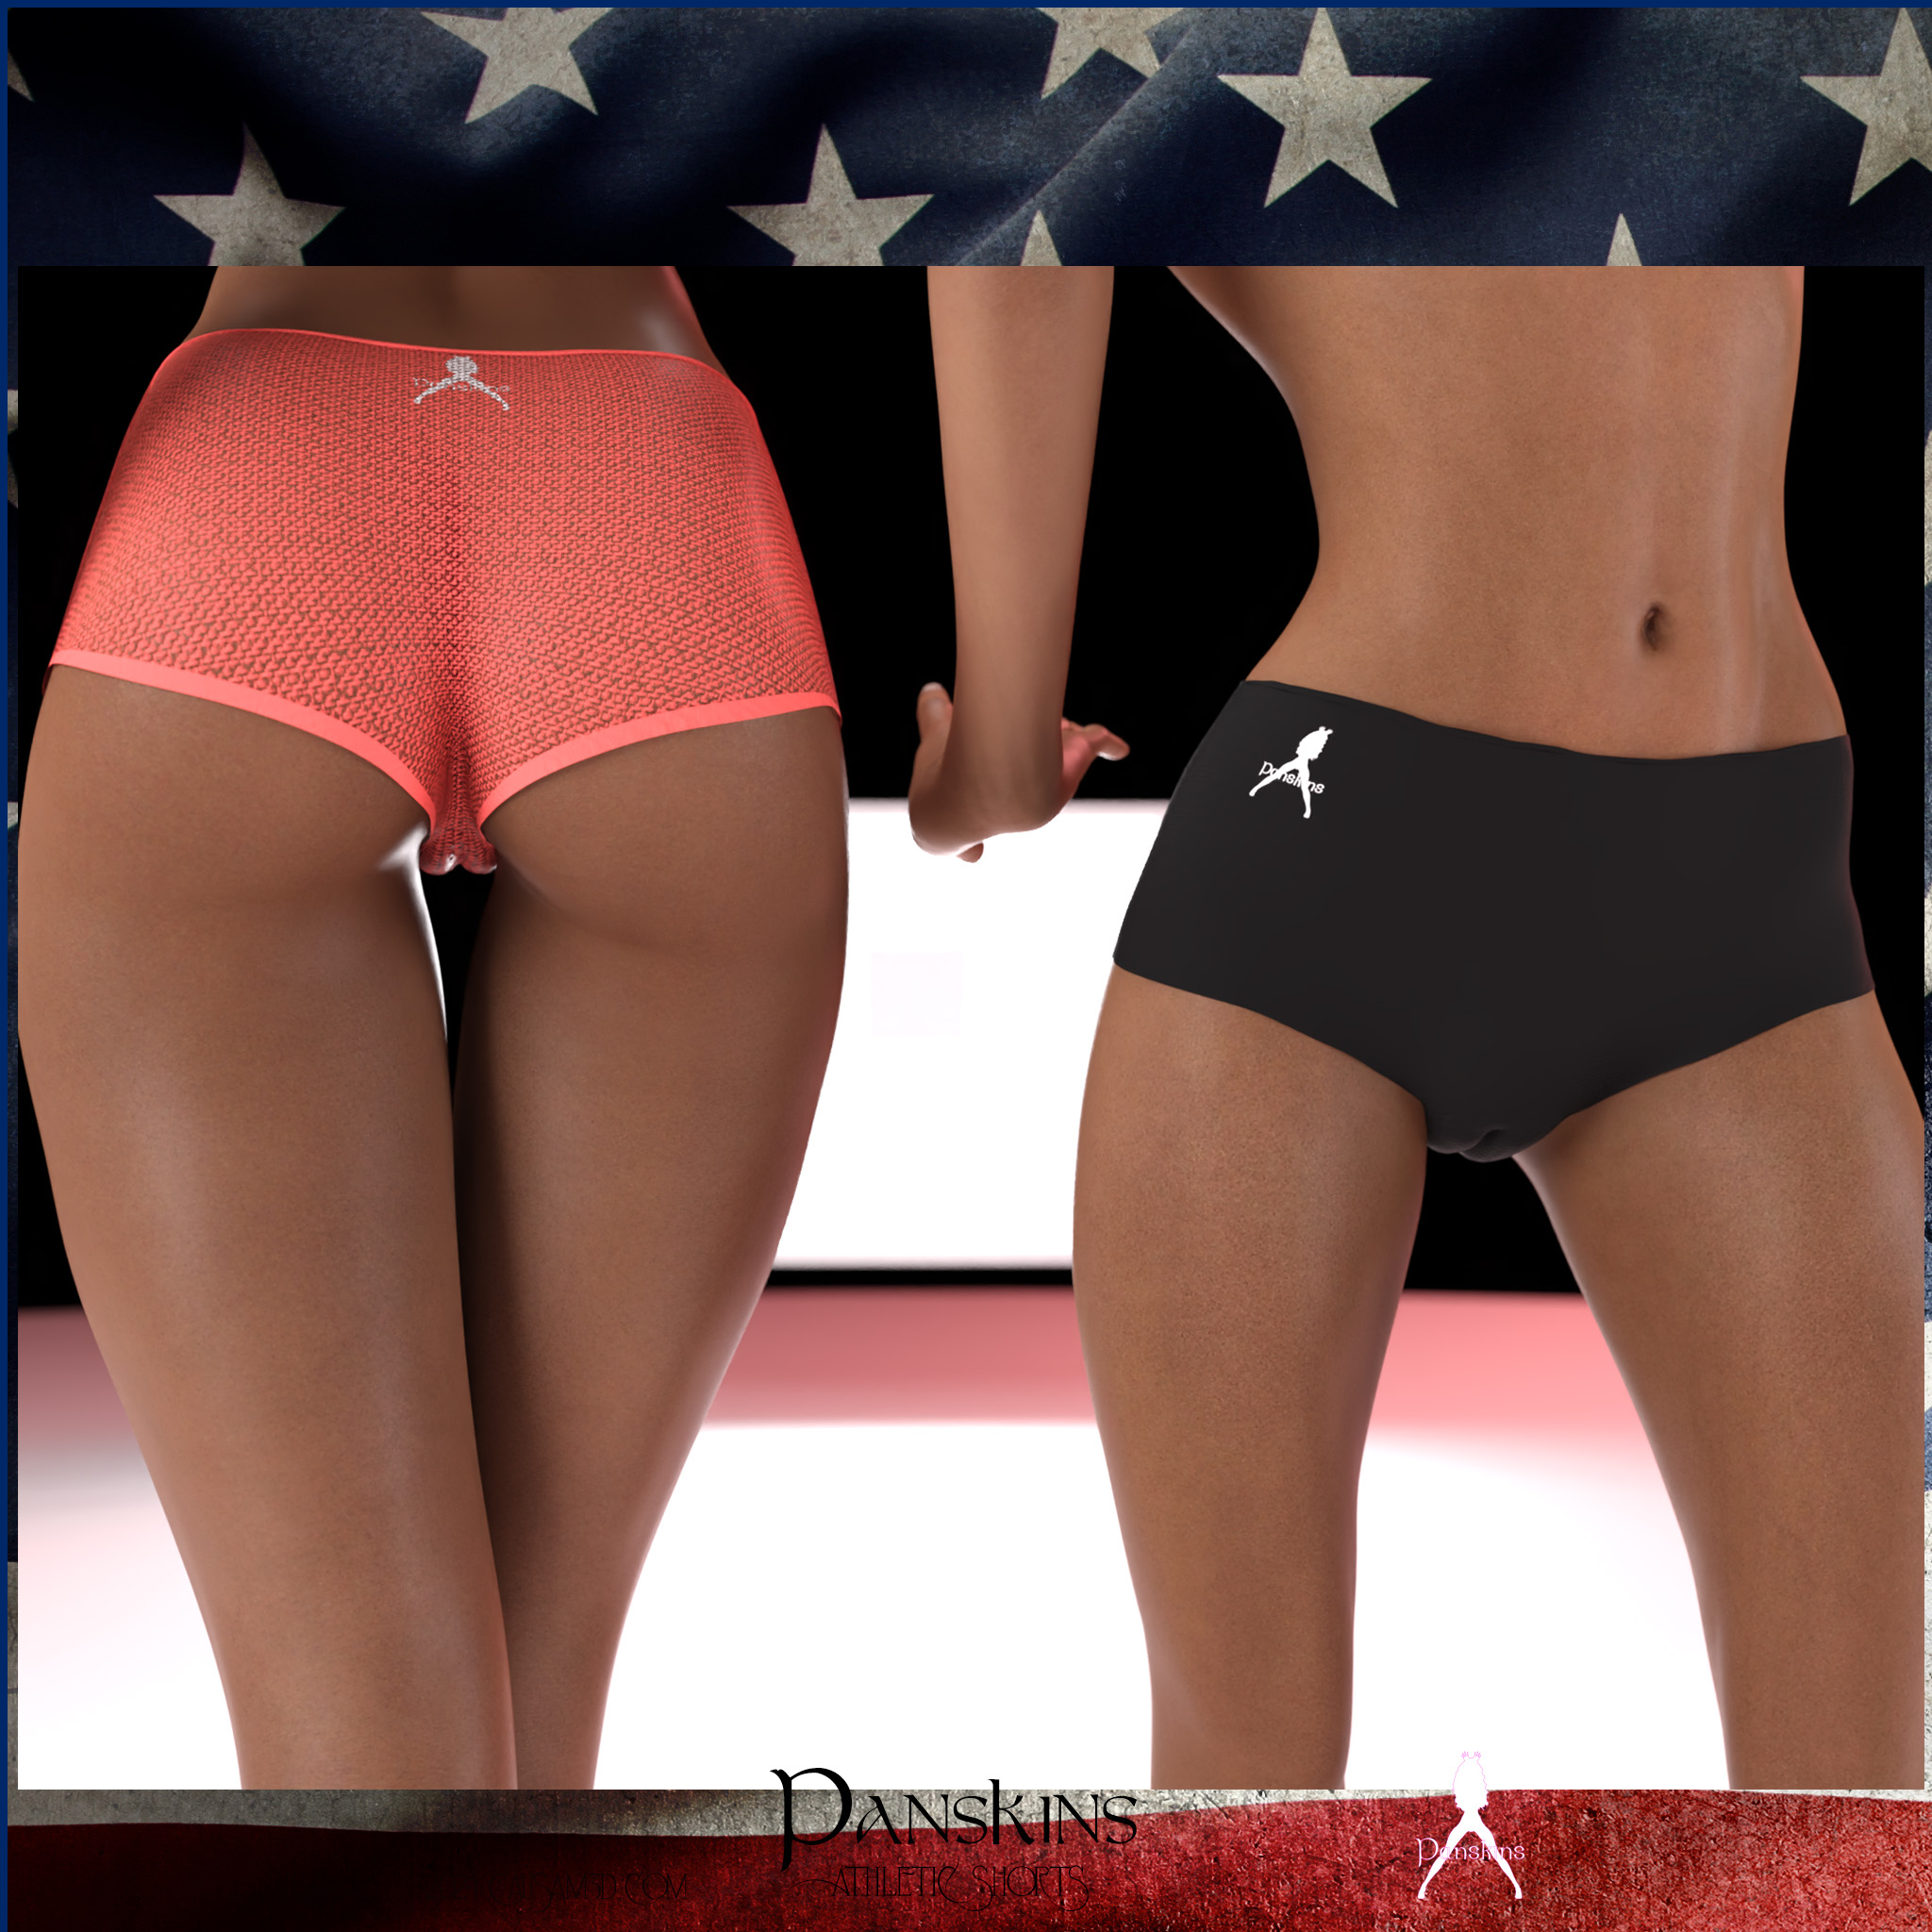 Panskins Athletic Shorts for Daz Genesis 8 Female